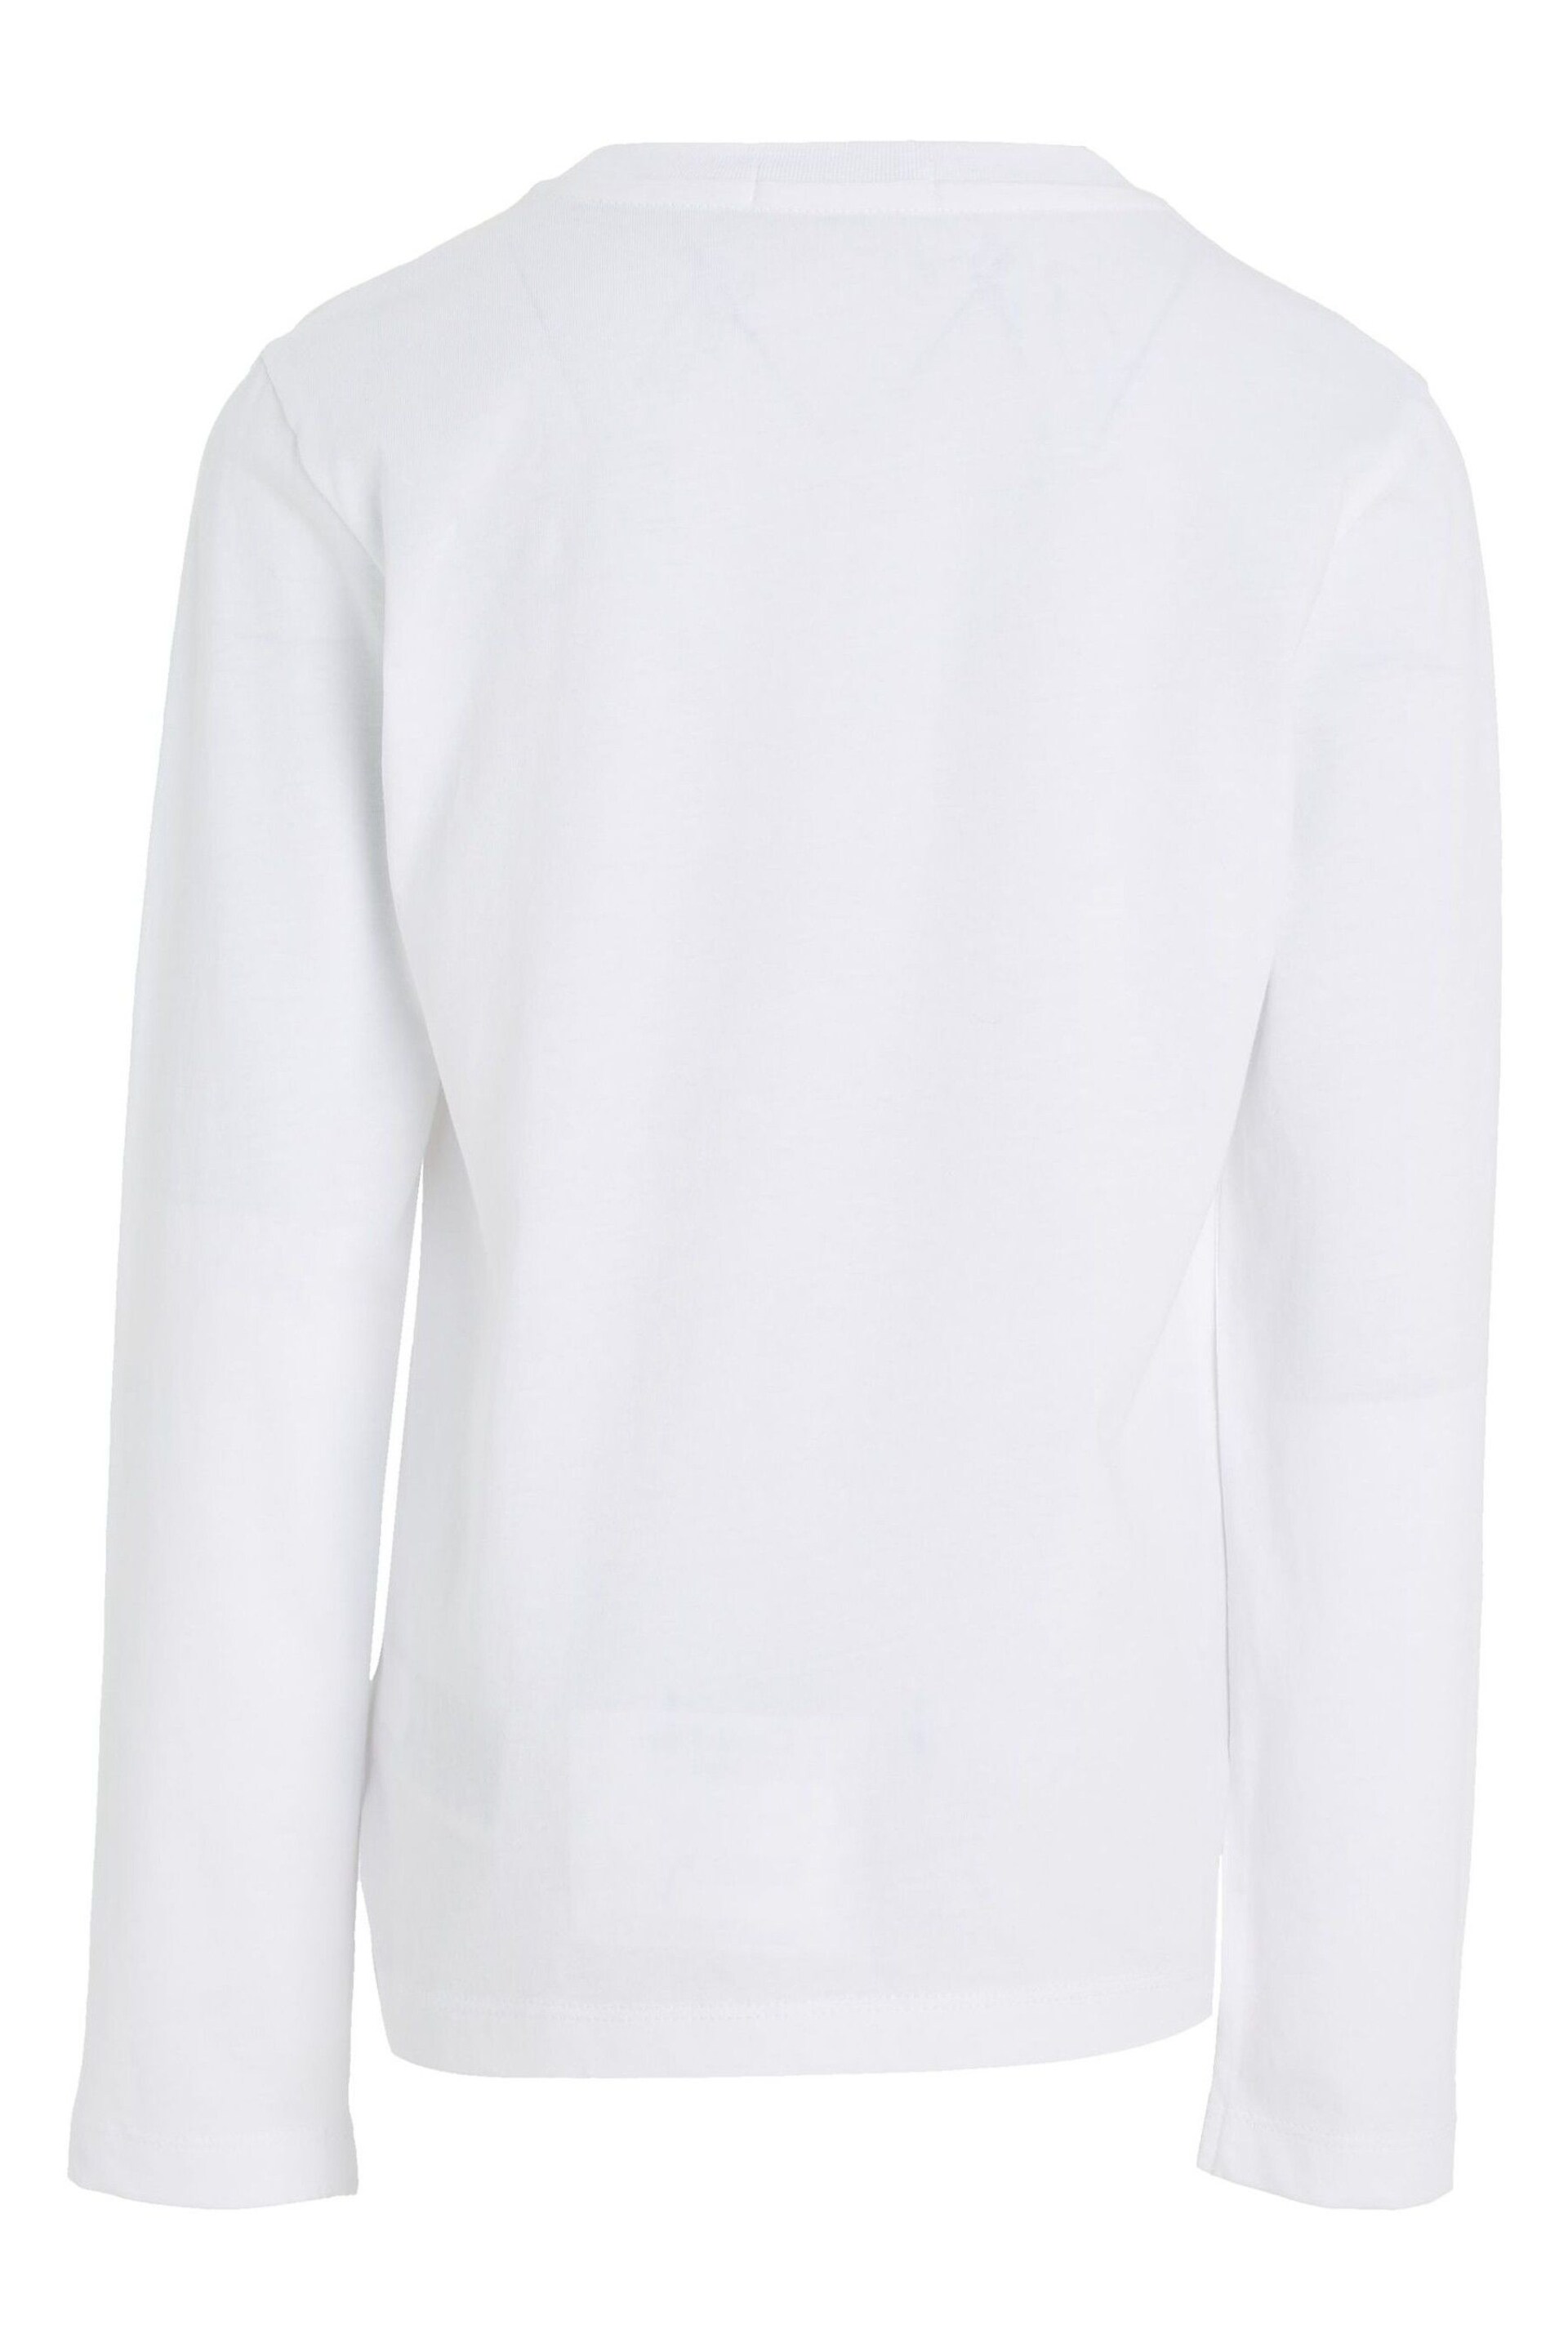 Calvin Klein Jeans White Monogram Long Sleeve Top - Image 5 of 6